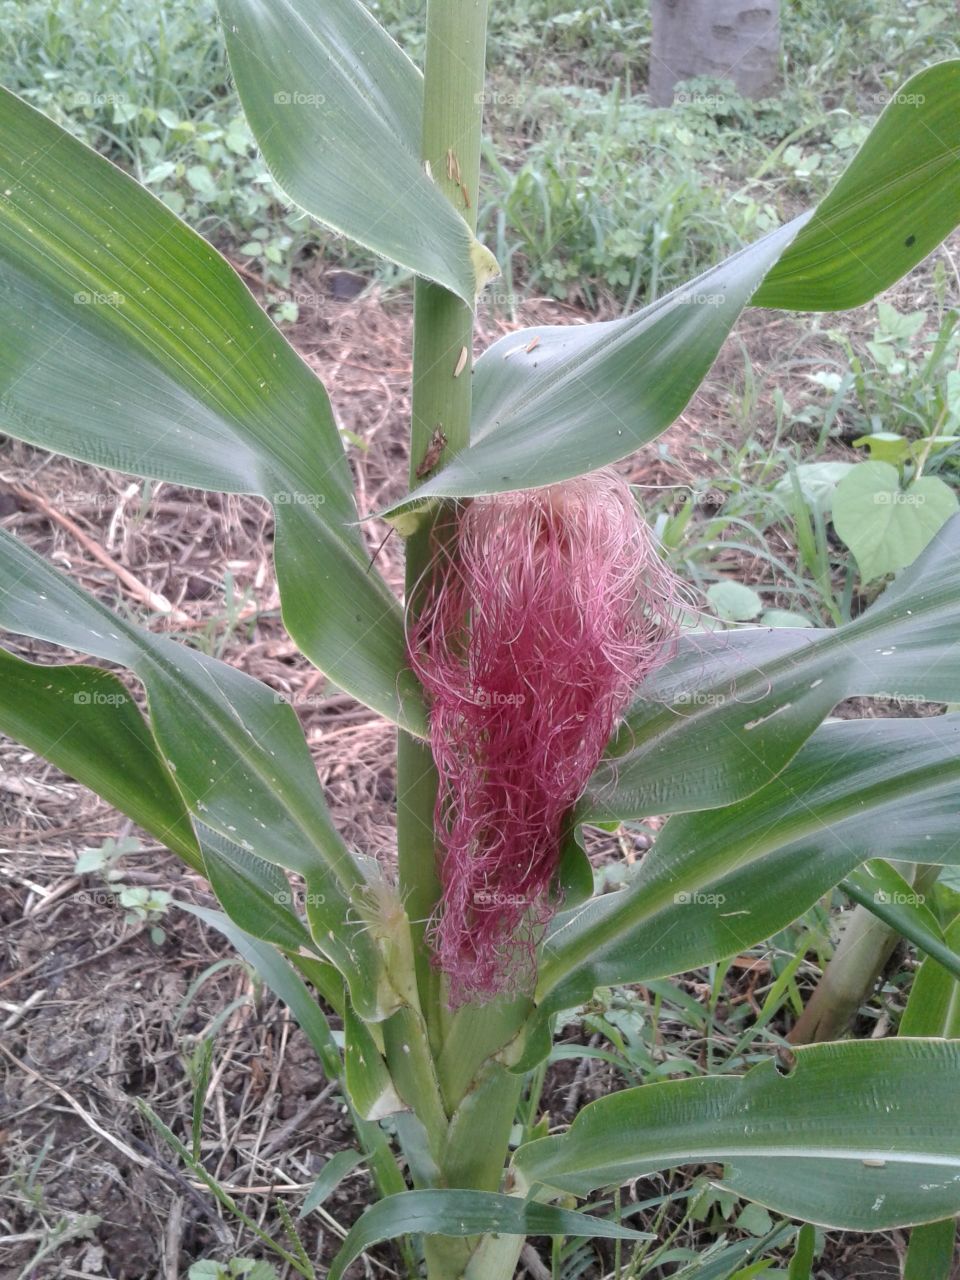 redhair corn